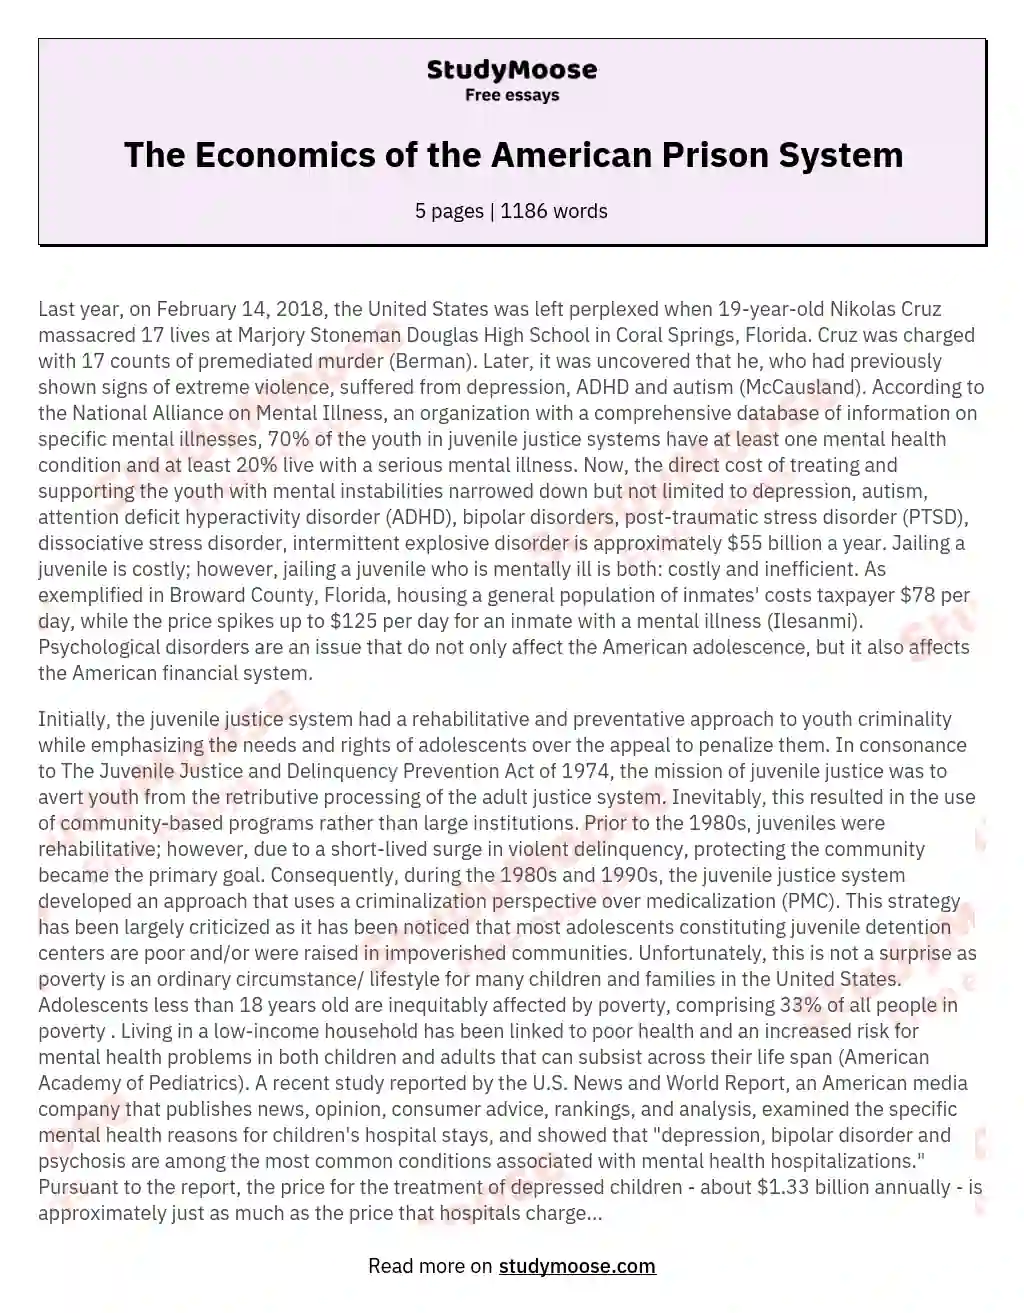 The Economics of the American Prison System essay